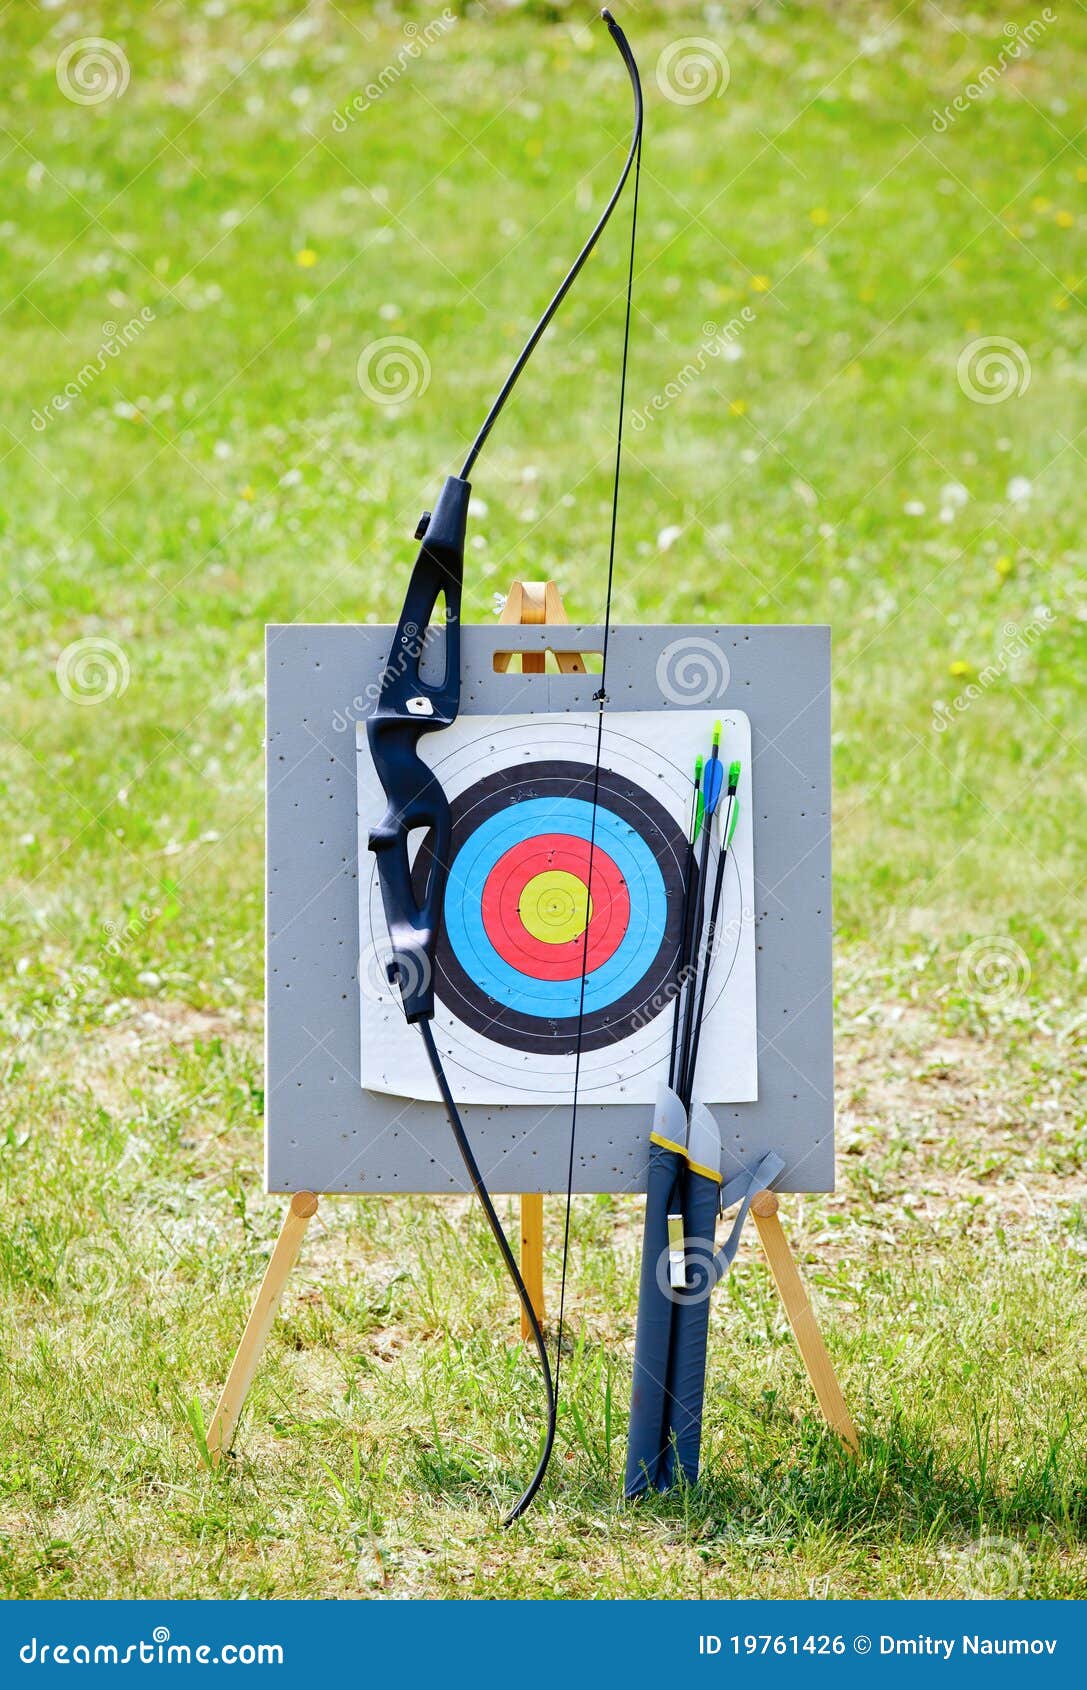 Target Archery Equipment 19761426 